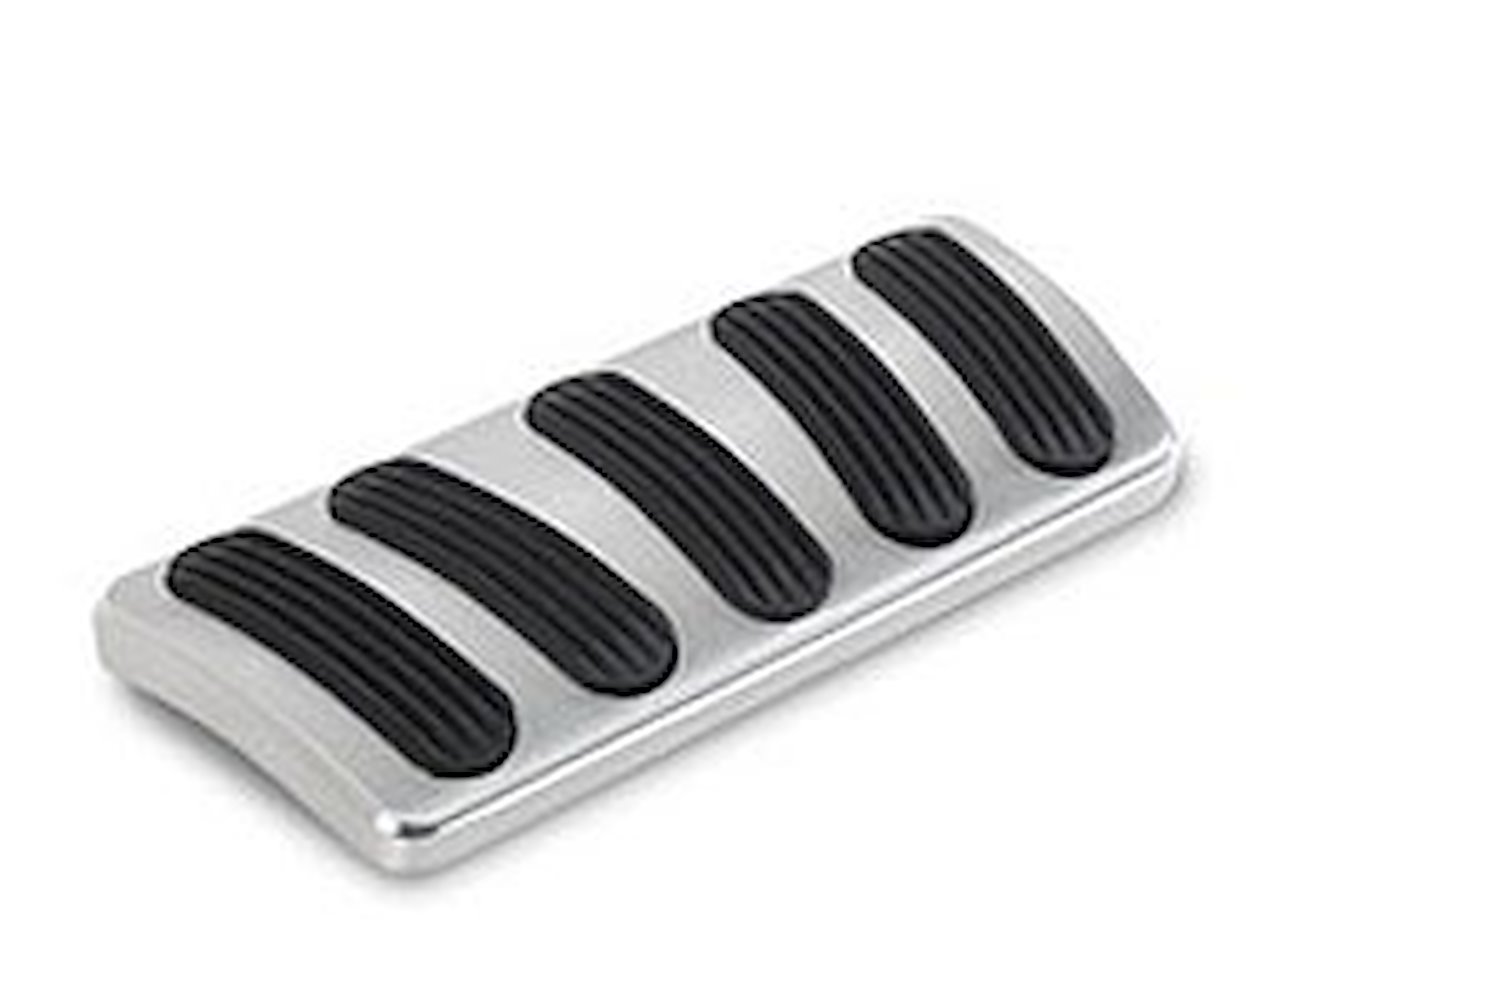 Billet Aluminum Curved Automatic Brake Pad Brushed Aluminum w/Rubber Insert